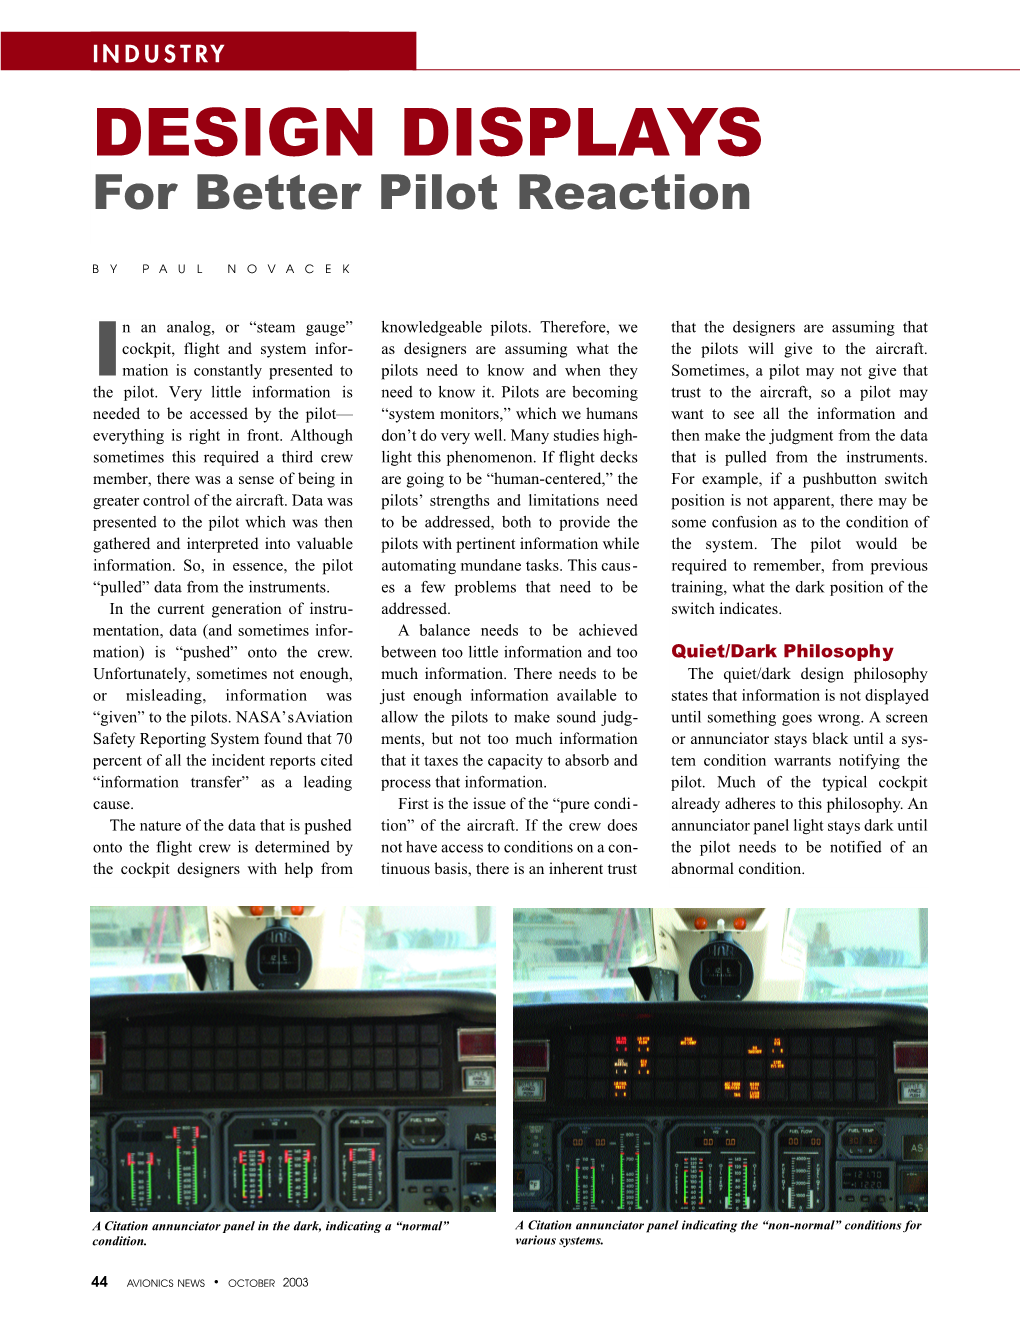 DESIGN DISPLAYS for Better Pilot Reaction